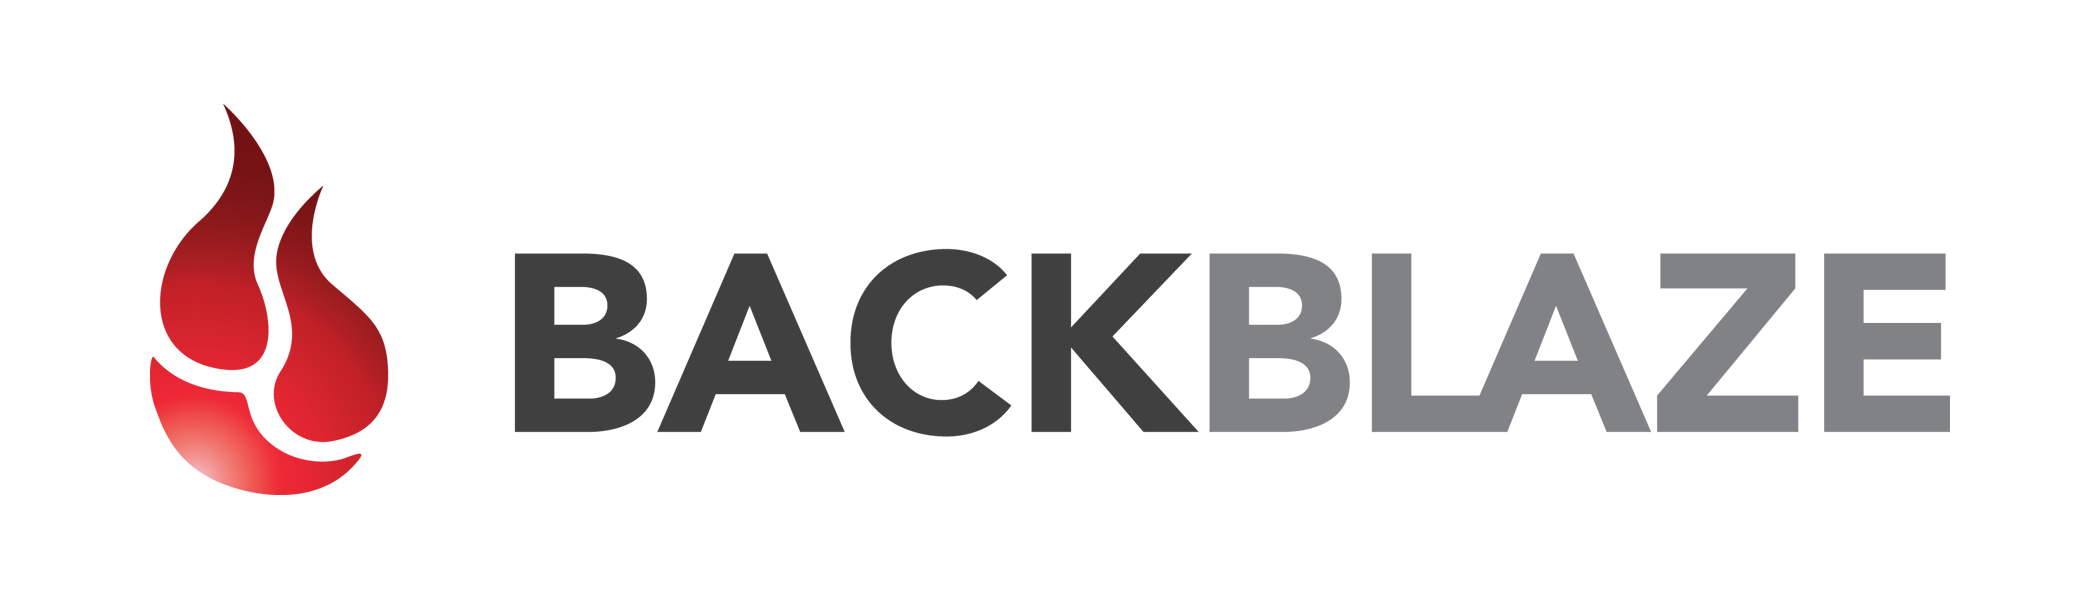 Backblaze B2 logo